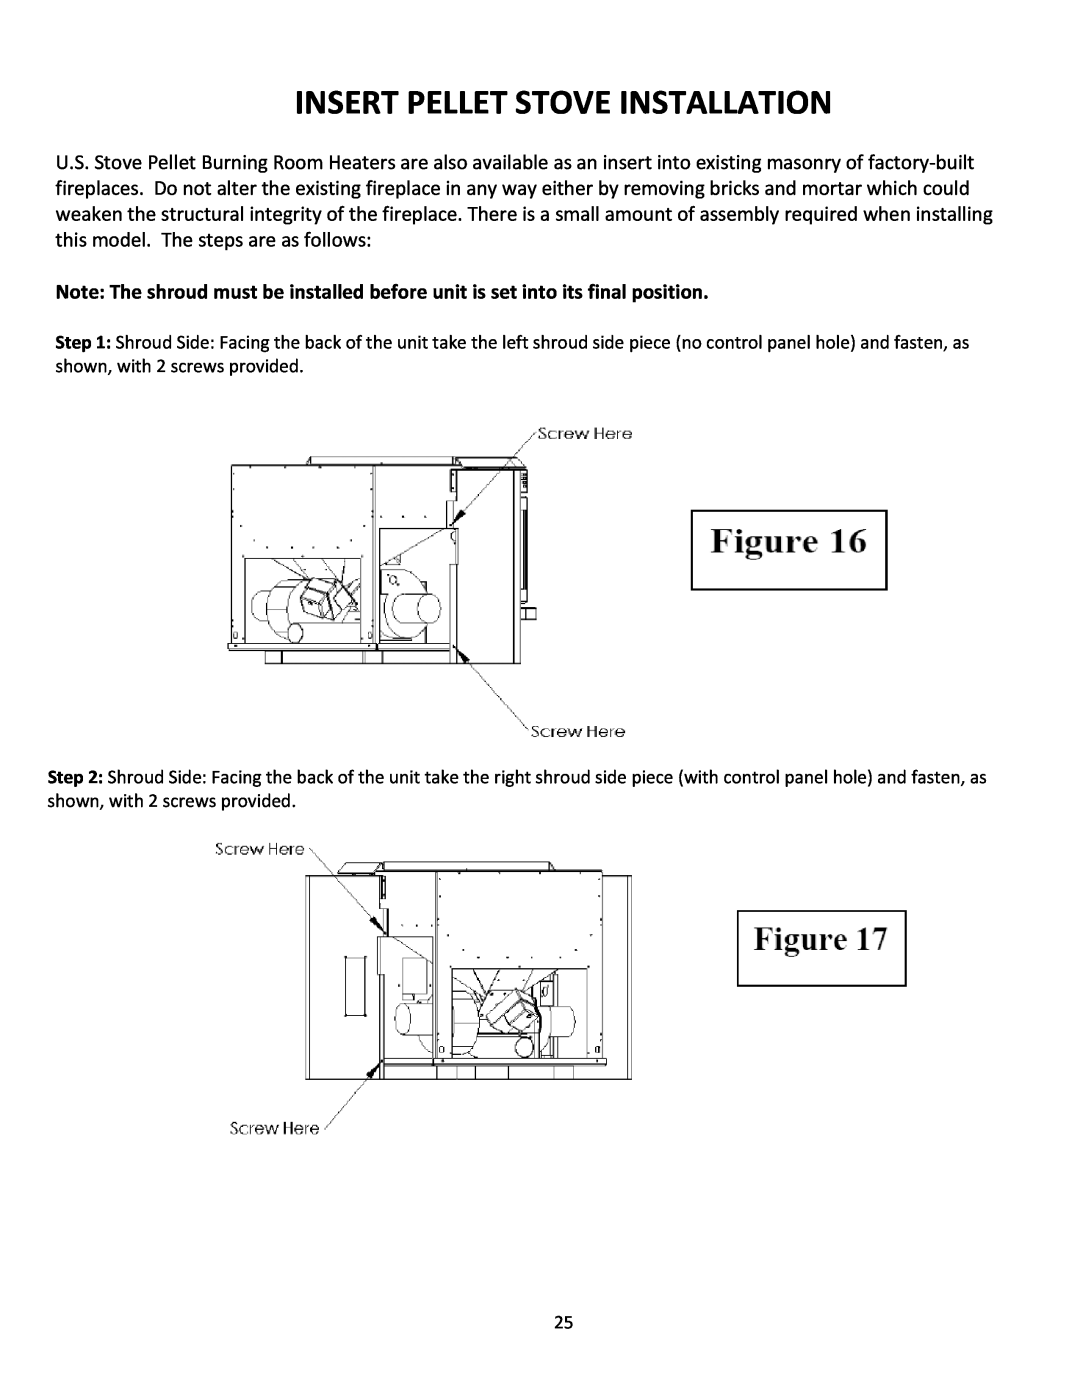 United States Stove 5660(I) manual Insert Pellet Stove Installation 